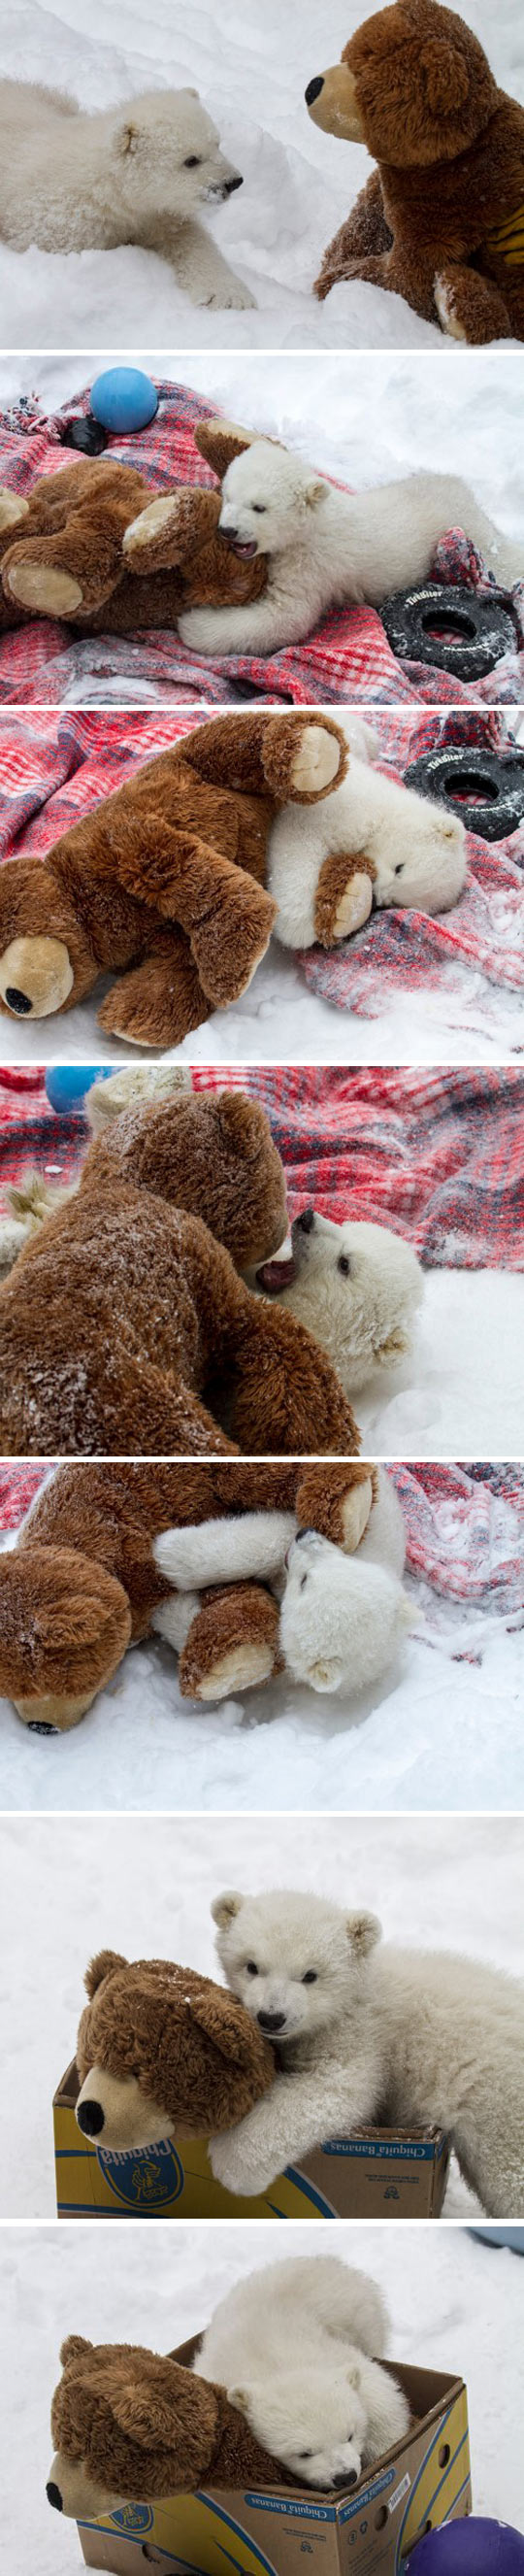 Polar bear cuddles!